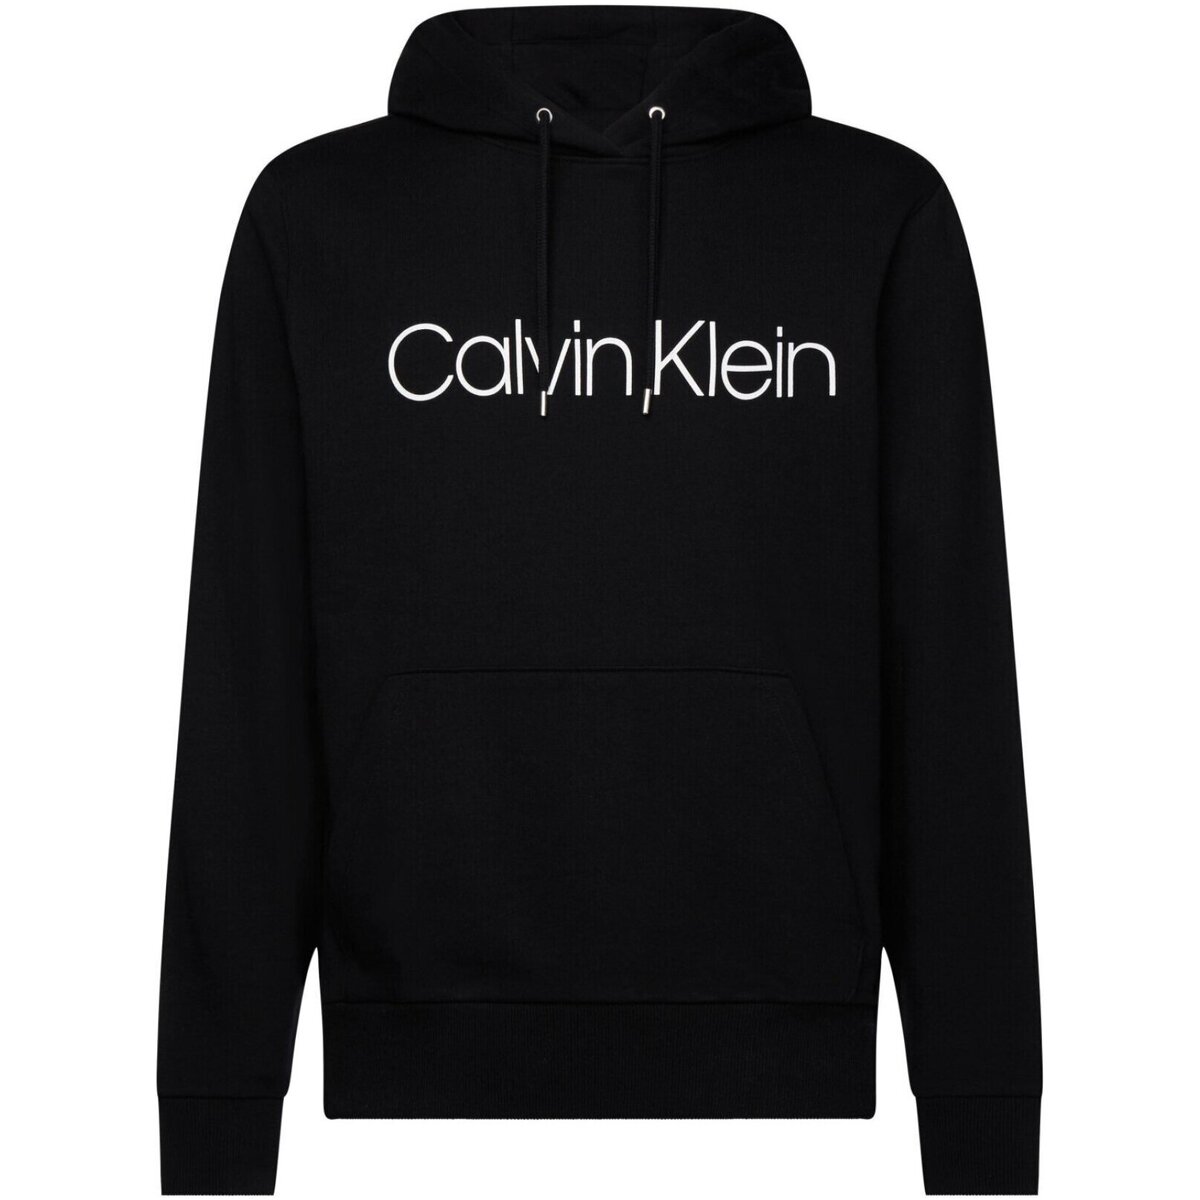 vaatteet Miehet Svetari Calvin Klein Jeans K10K104060 Musta